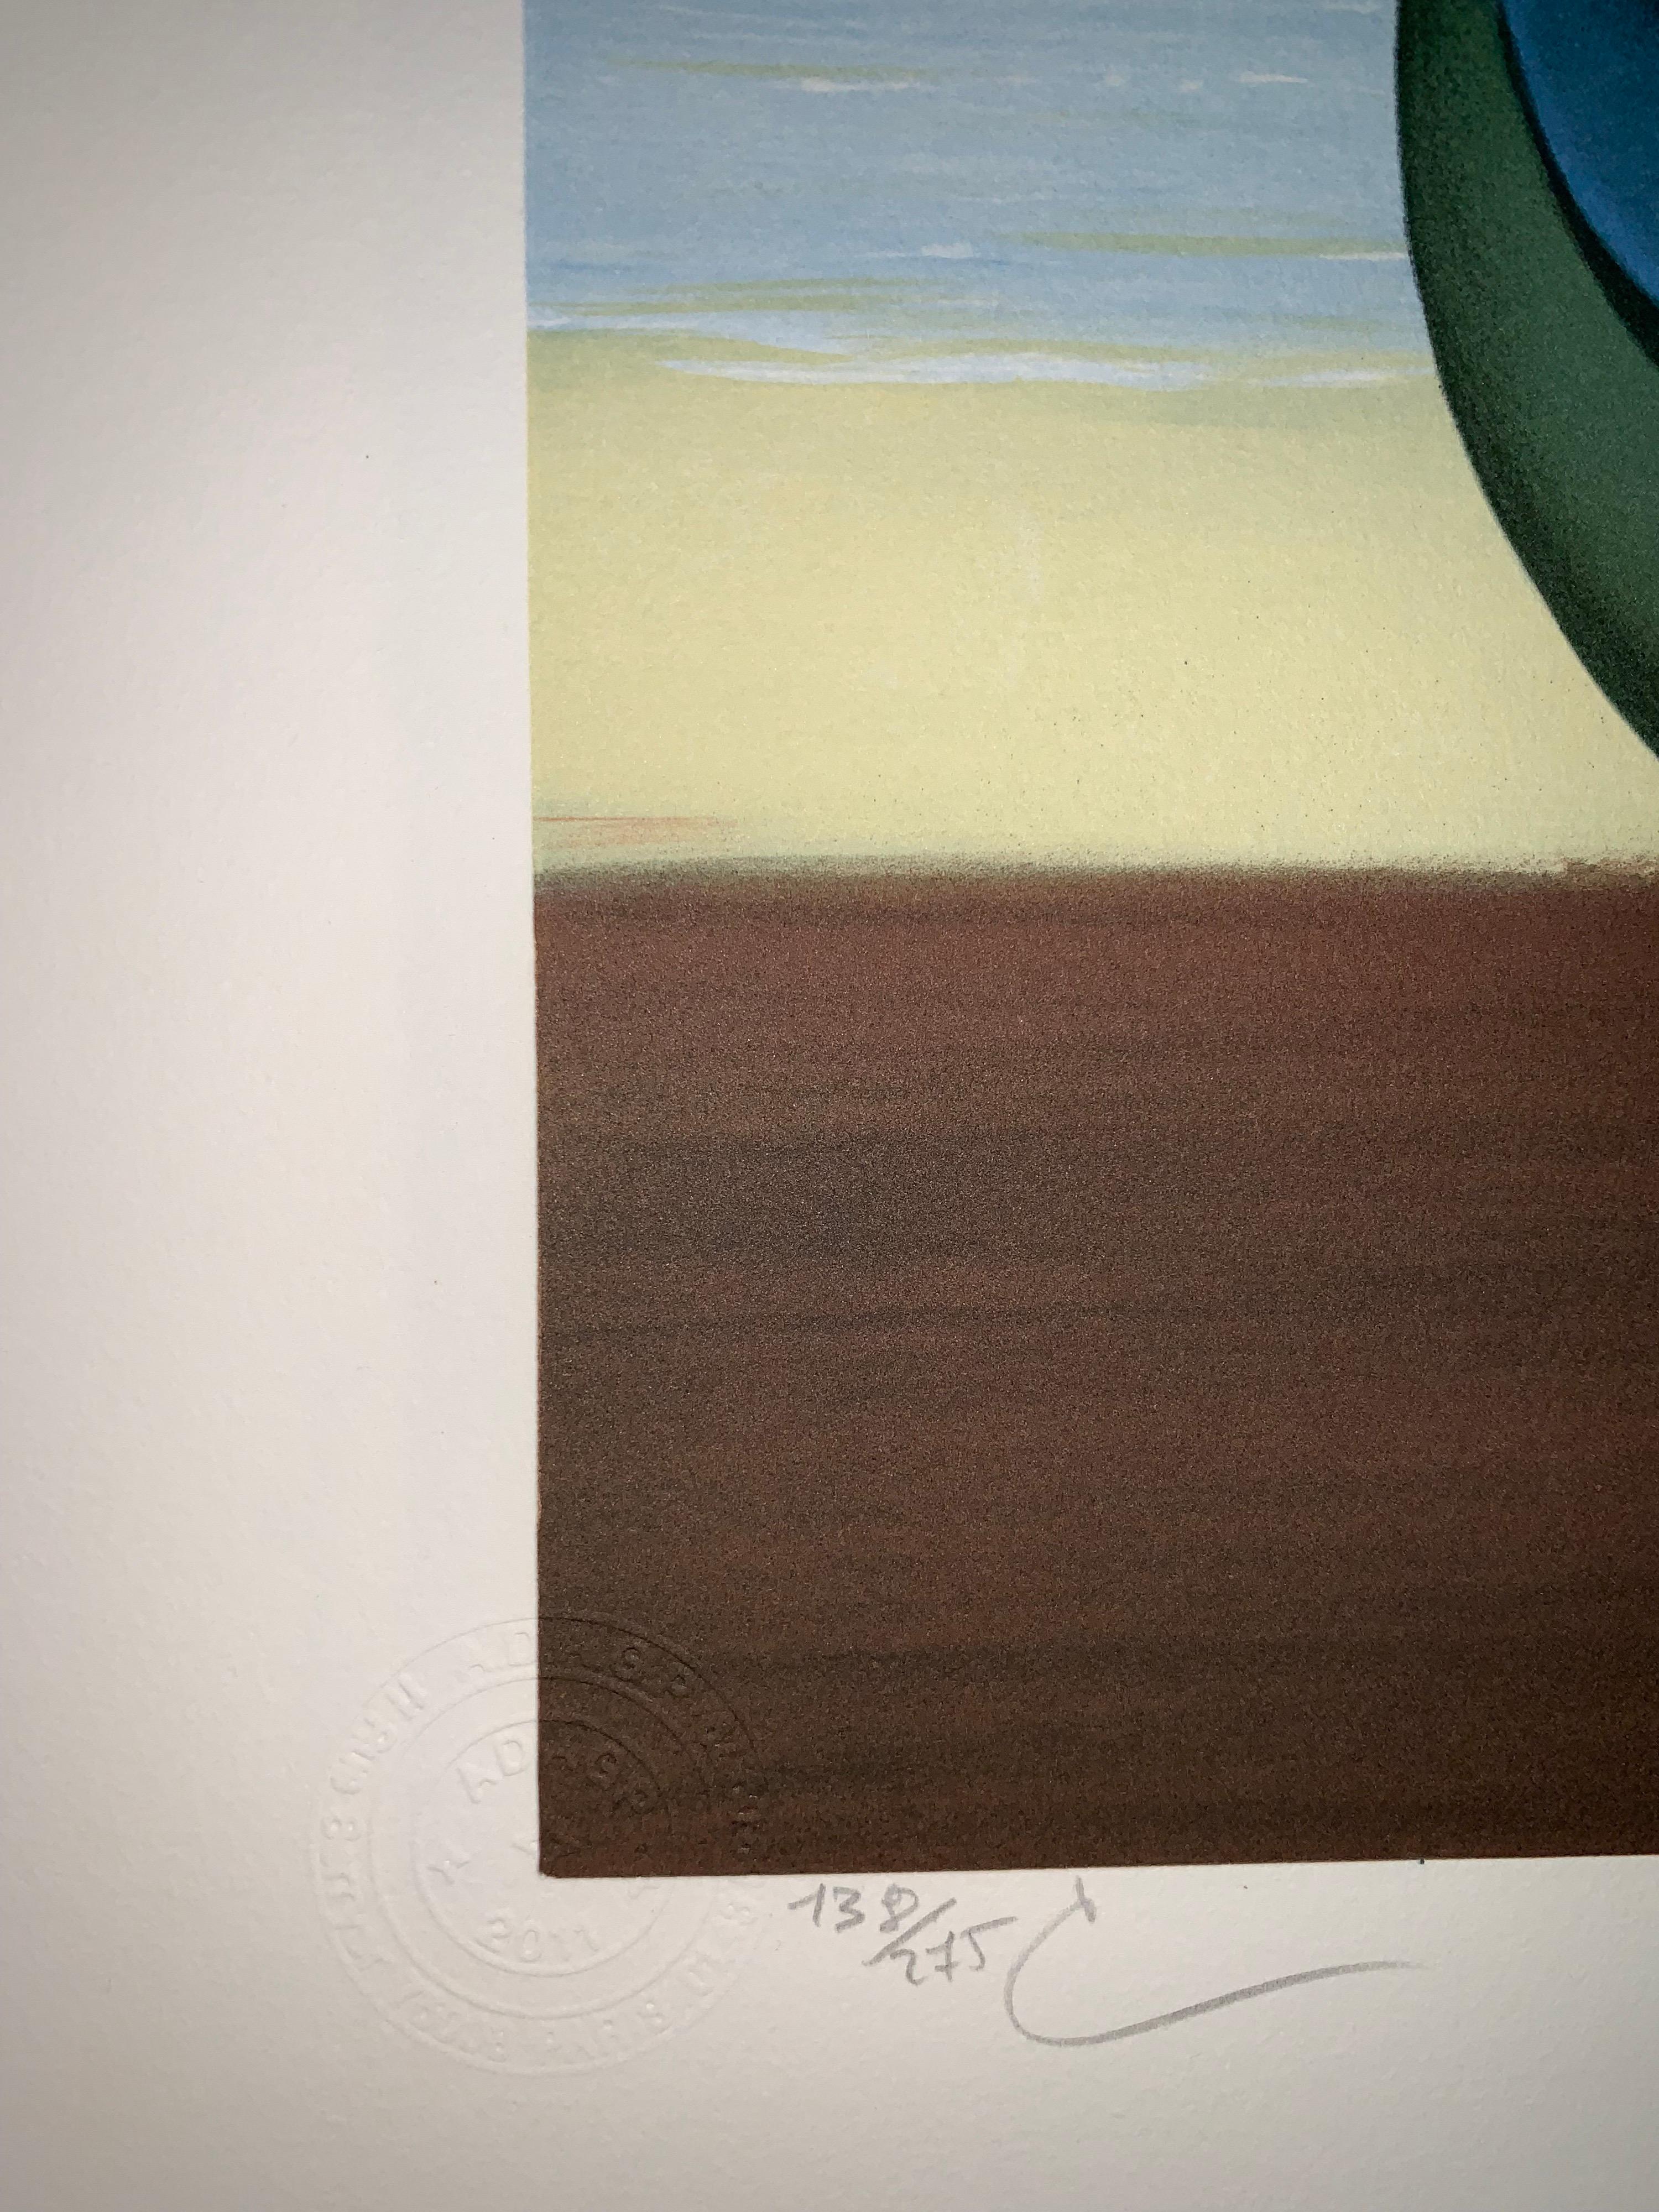 La Valse-Stitation - 20. Jahrhundert, Surrealistisch, Lithographie, figurativer Druck (Surrealismus), Print, von (after) René Magritte